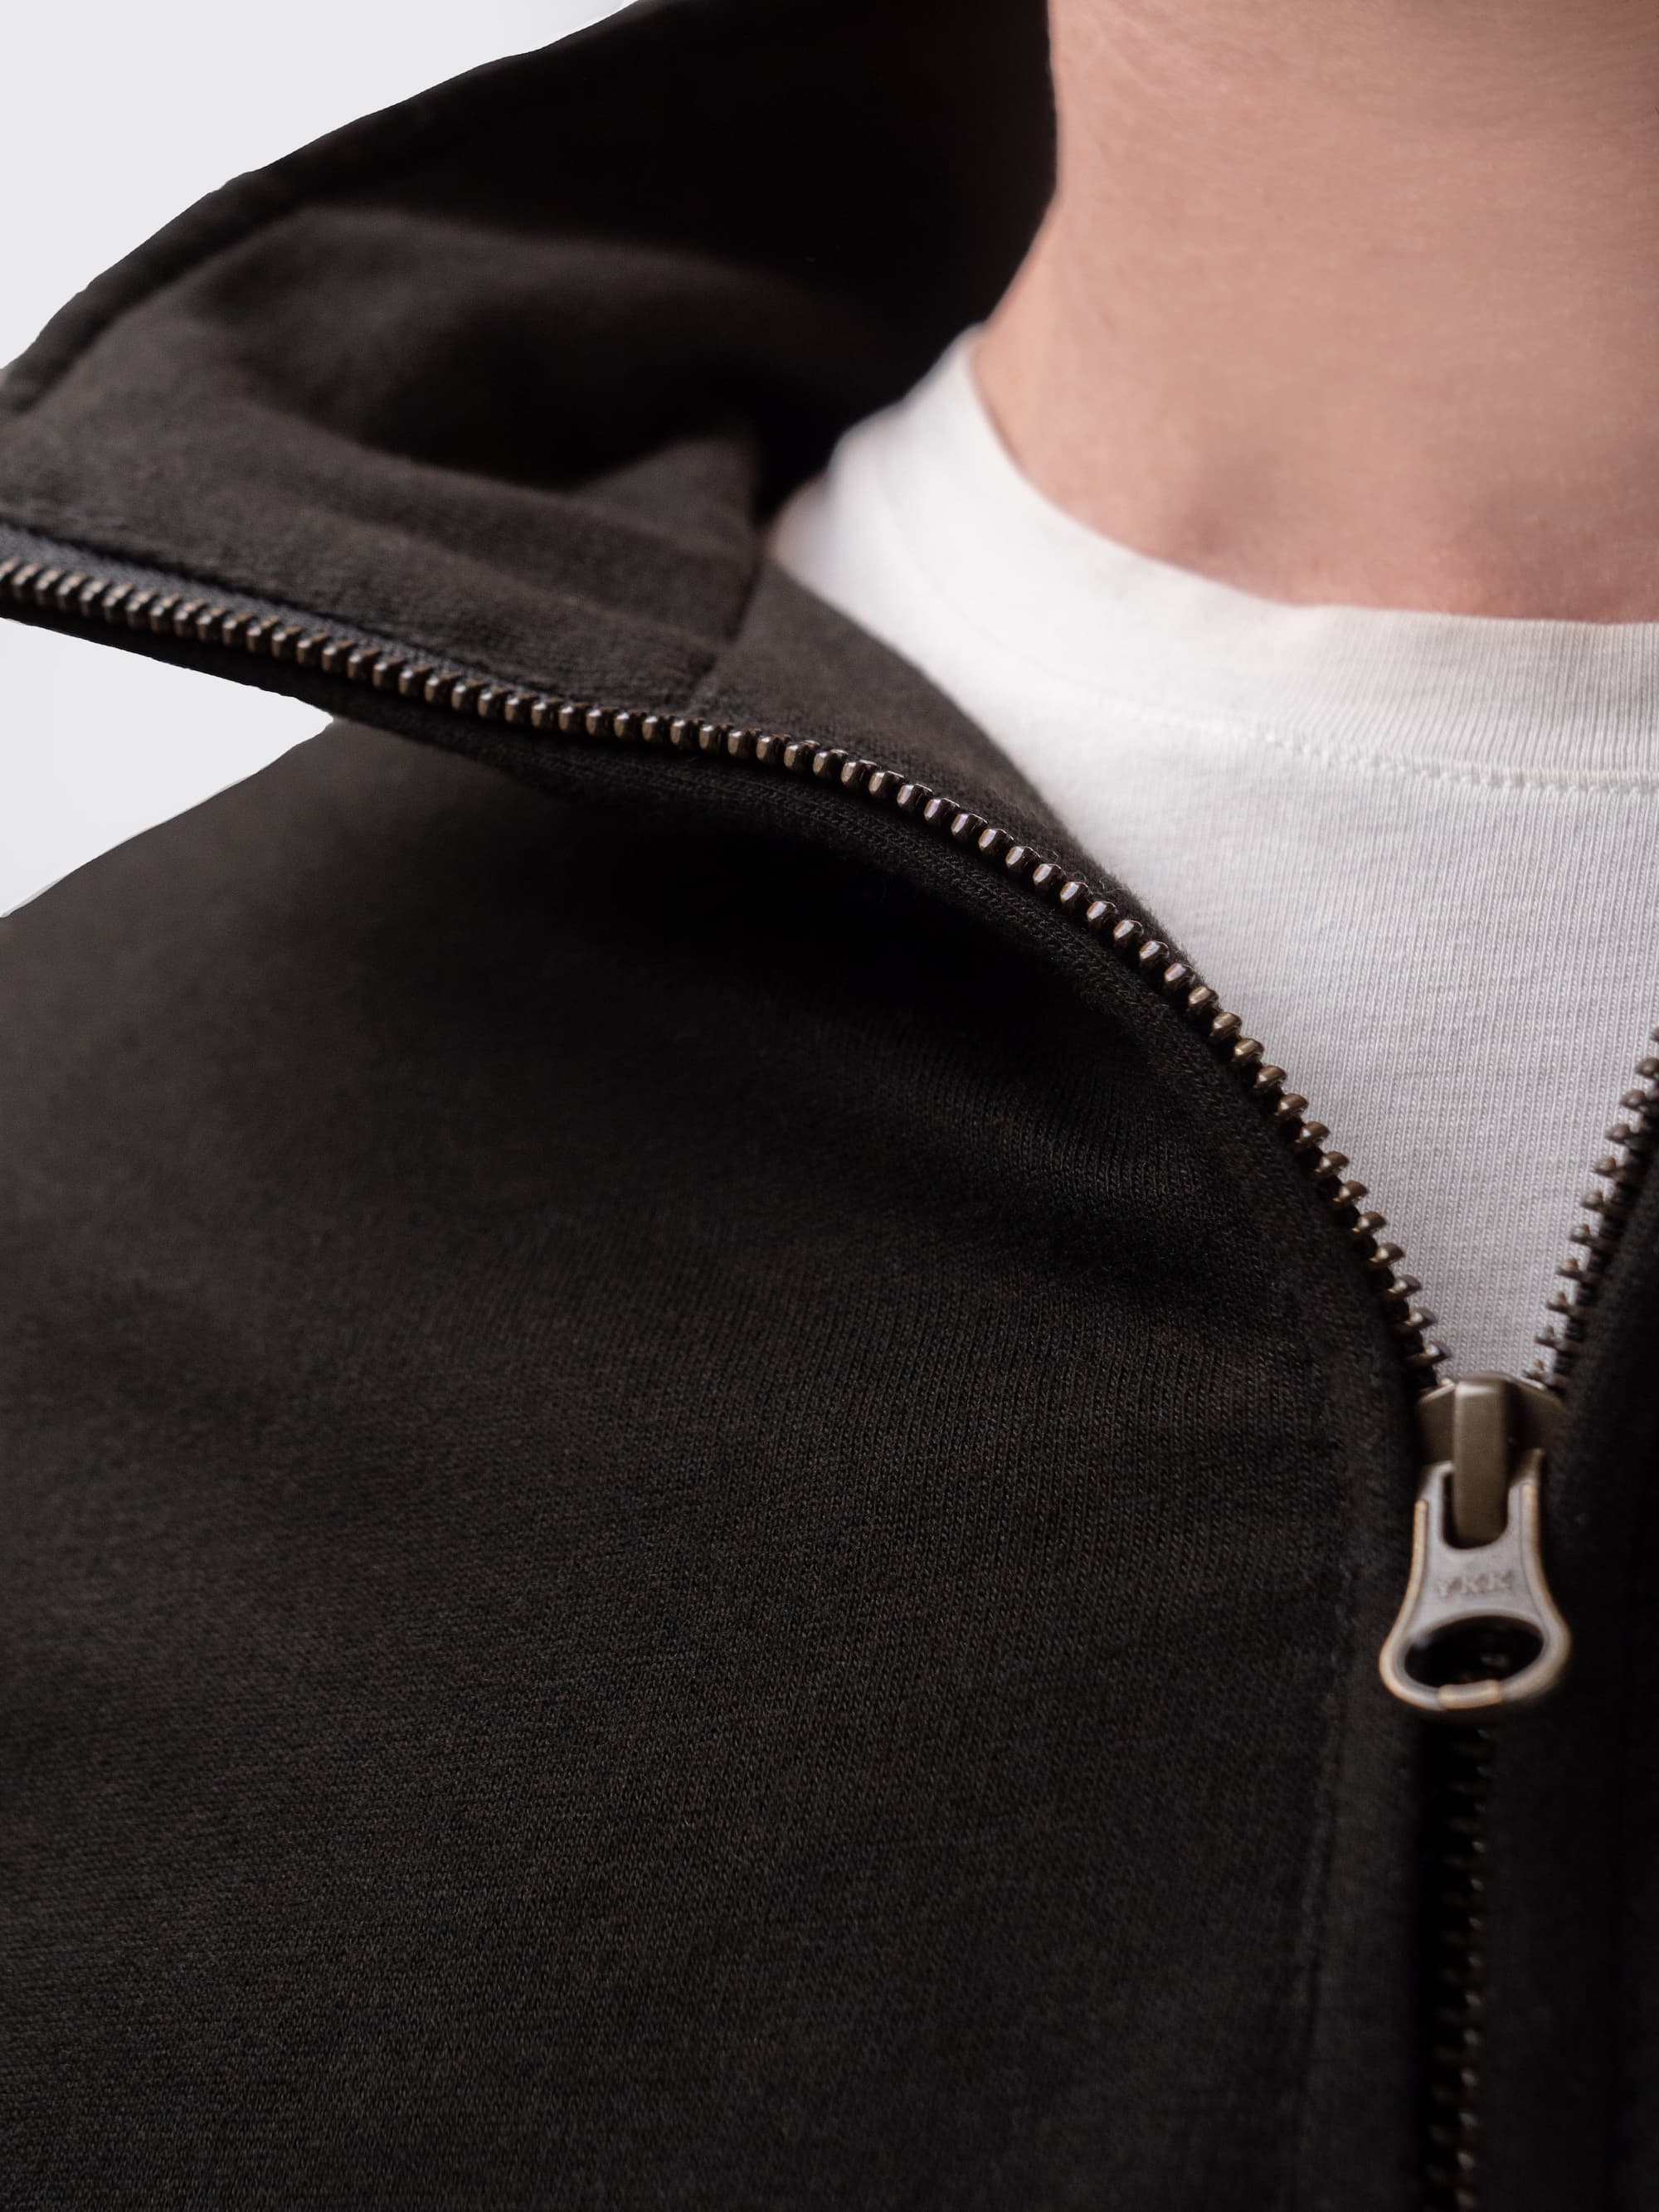 Black, unisex sweater with premium YKK zip